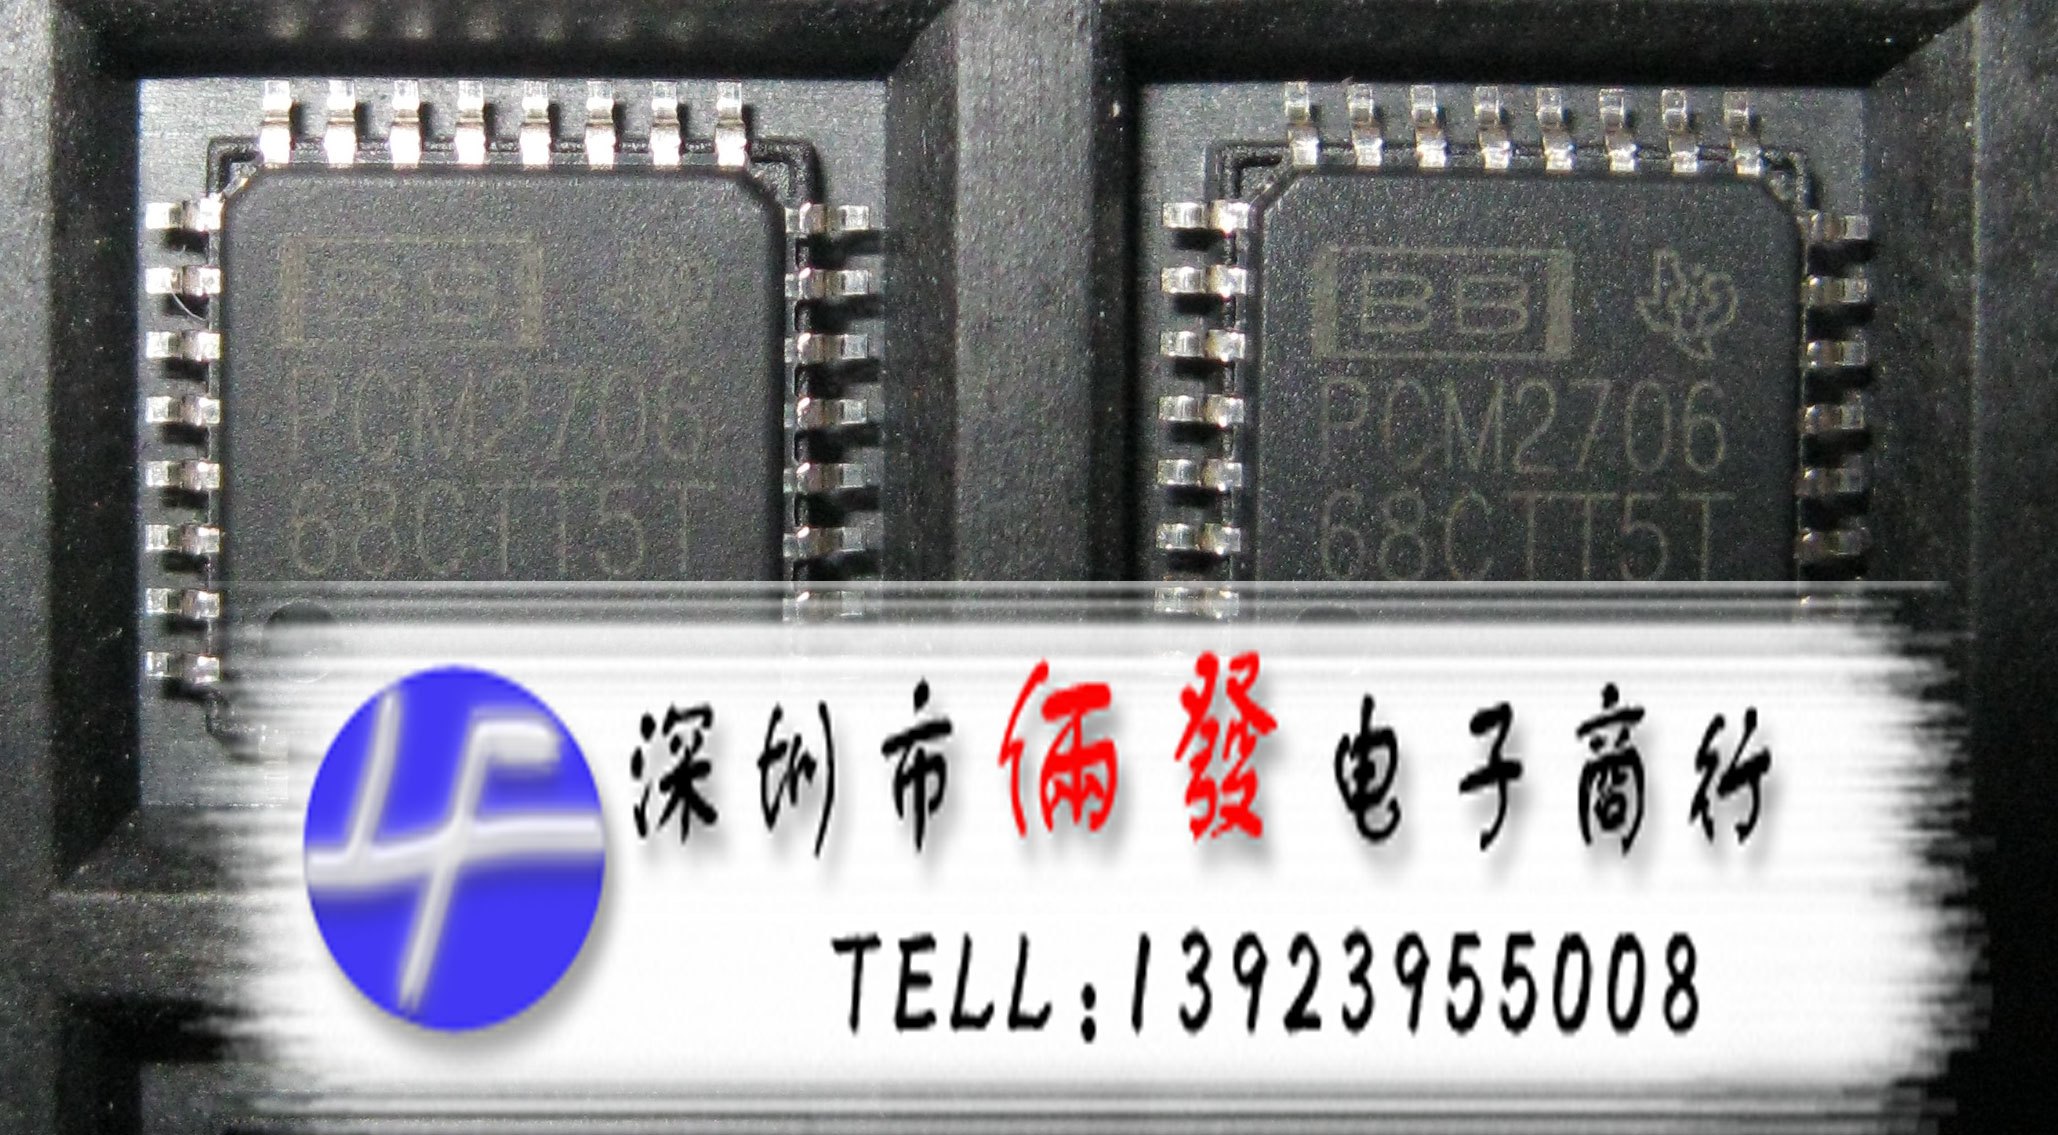 PCM2706PJTR. PB Manufacturer: TI Shenzhen Spot